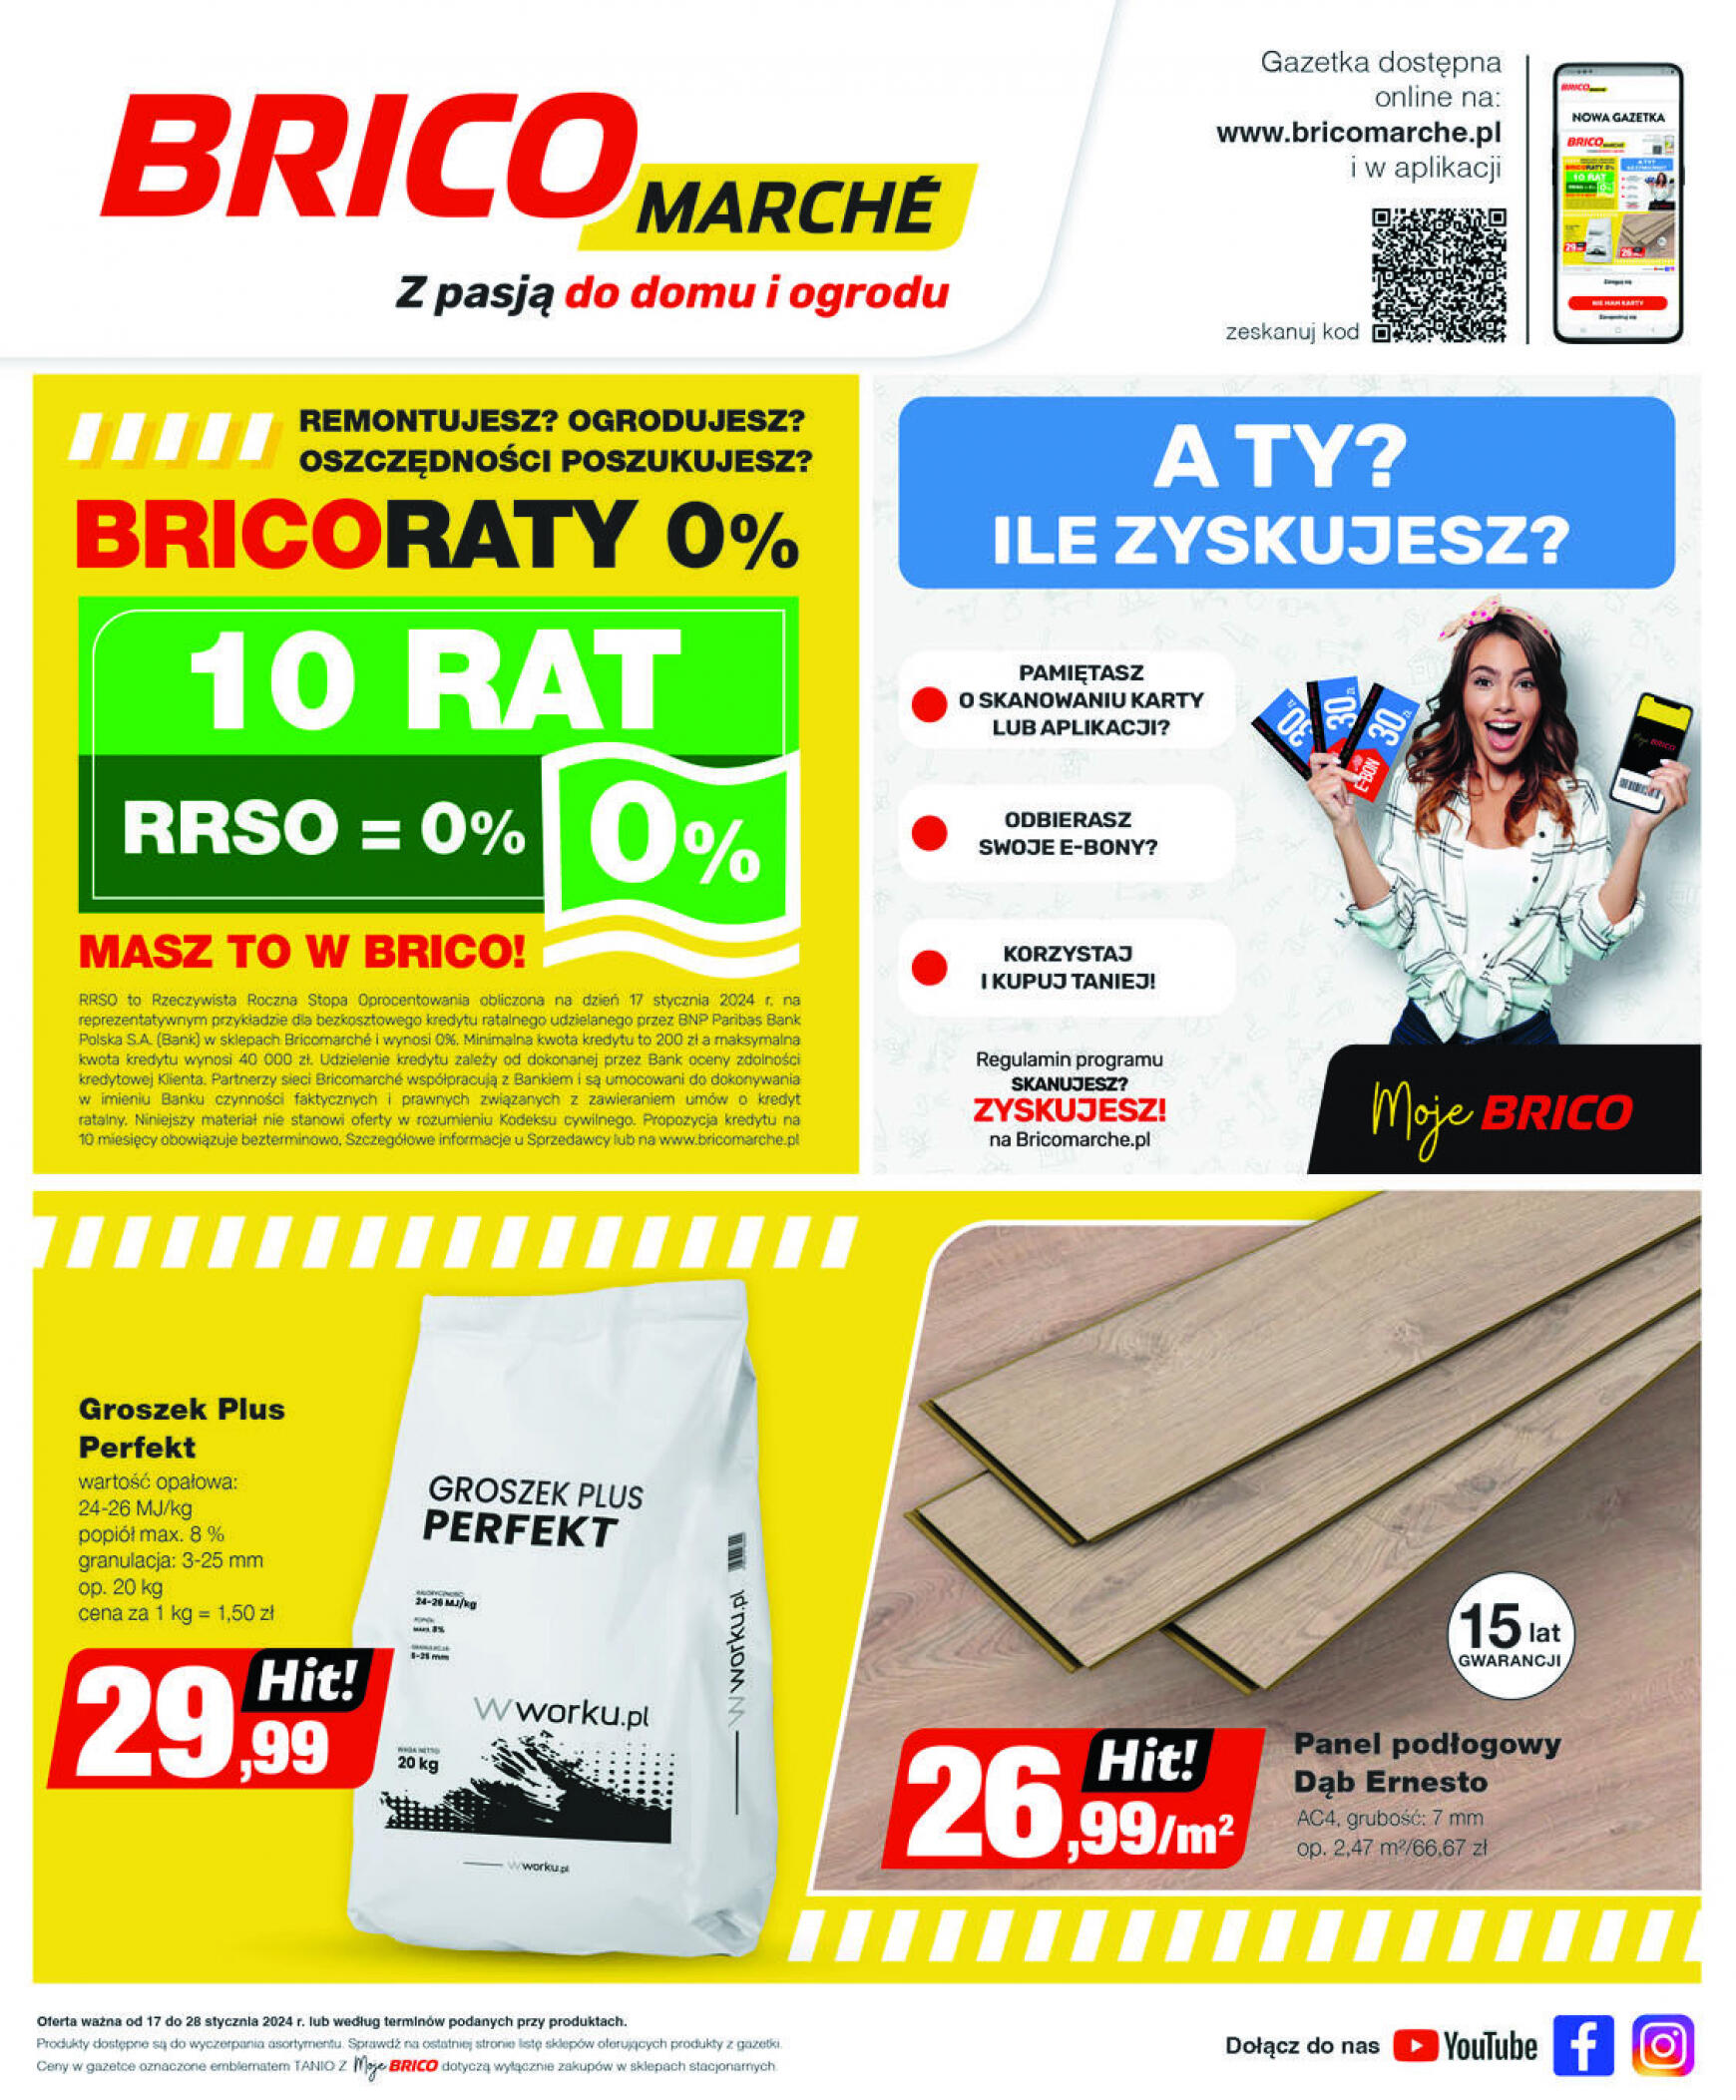 brico-marche - Brico Marché obowiązuje od 17.01.2024 - page: 1